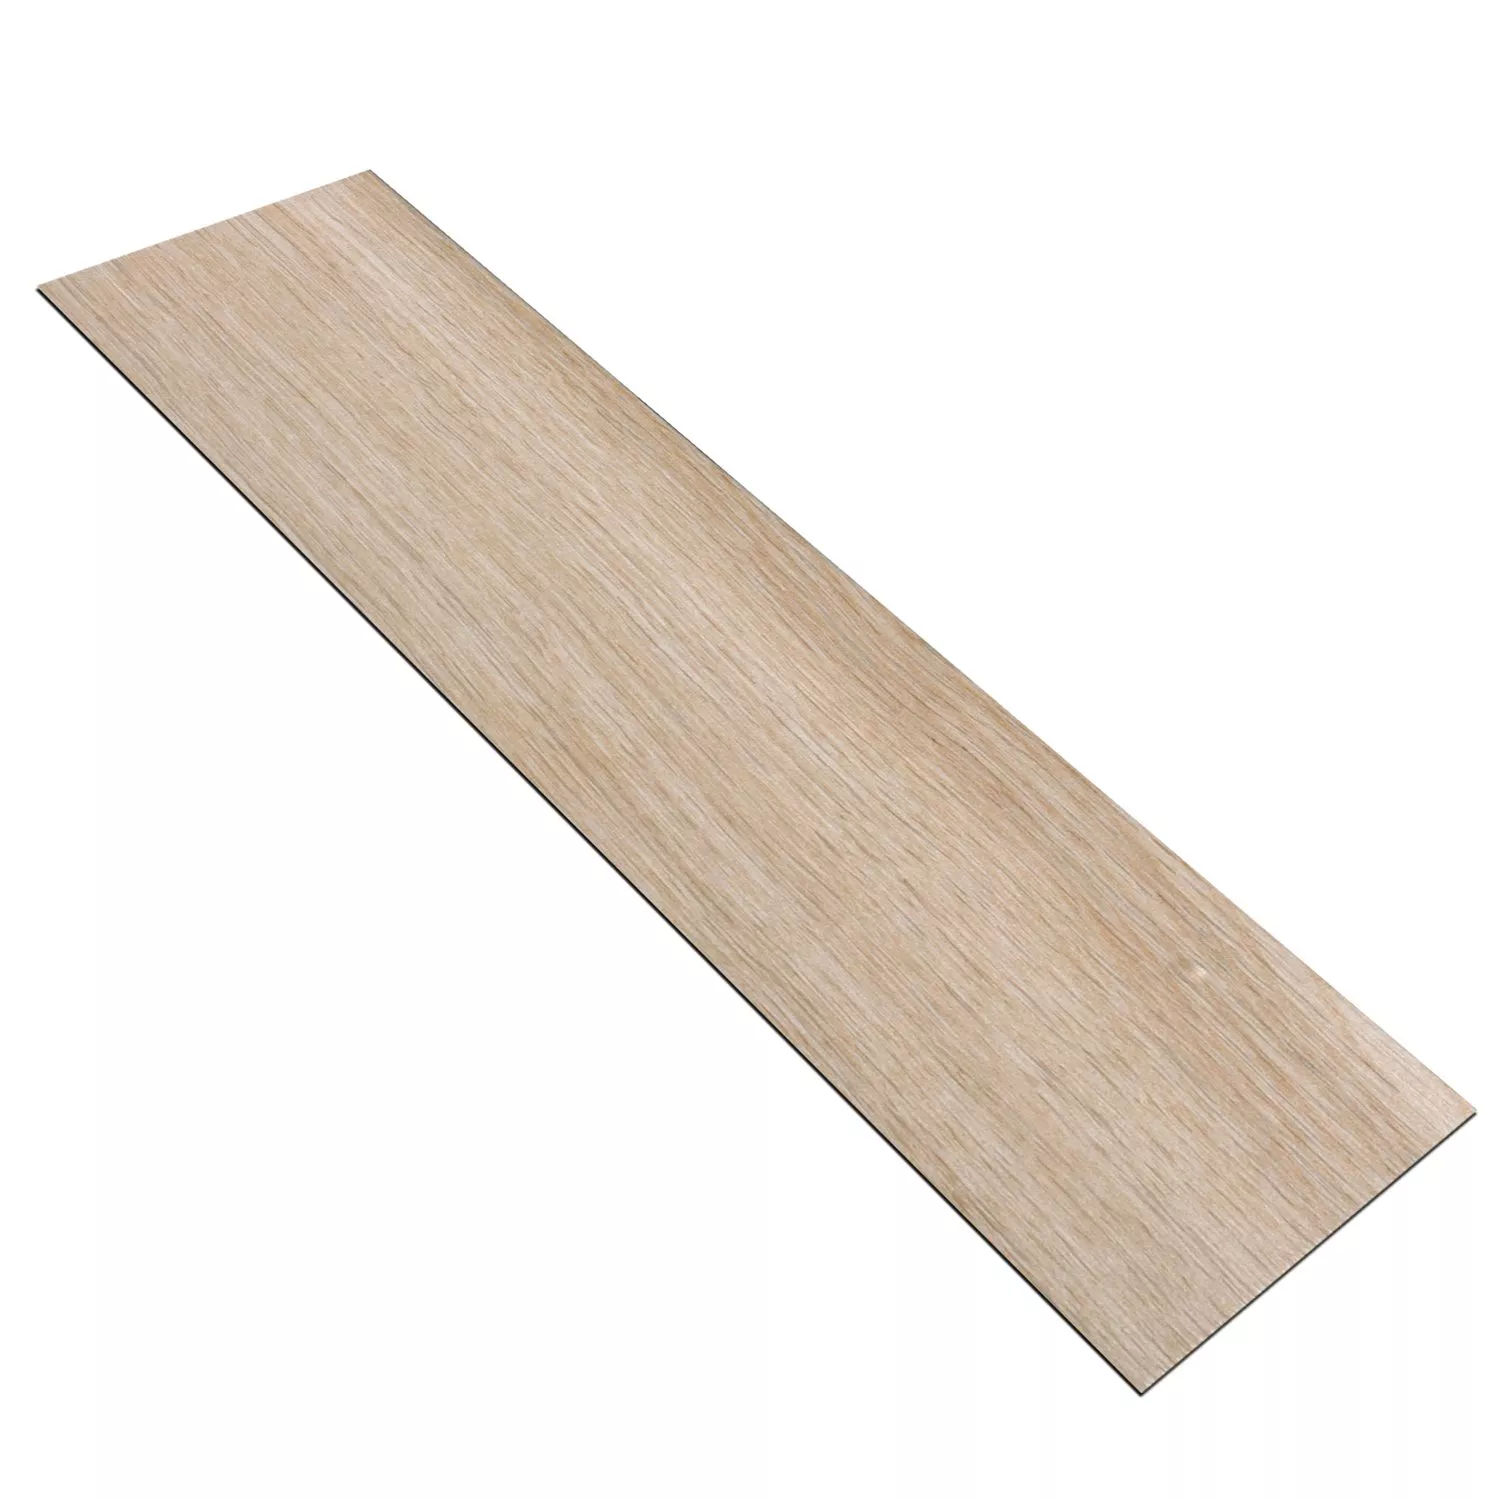 Sample Wood Optic Floor Tiles Eiffel Creme 10x60cm